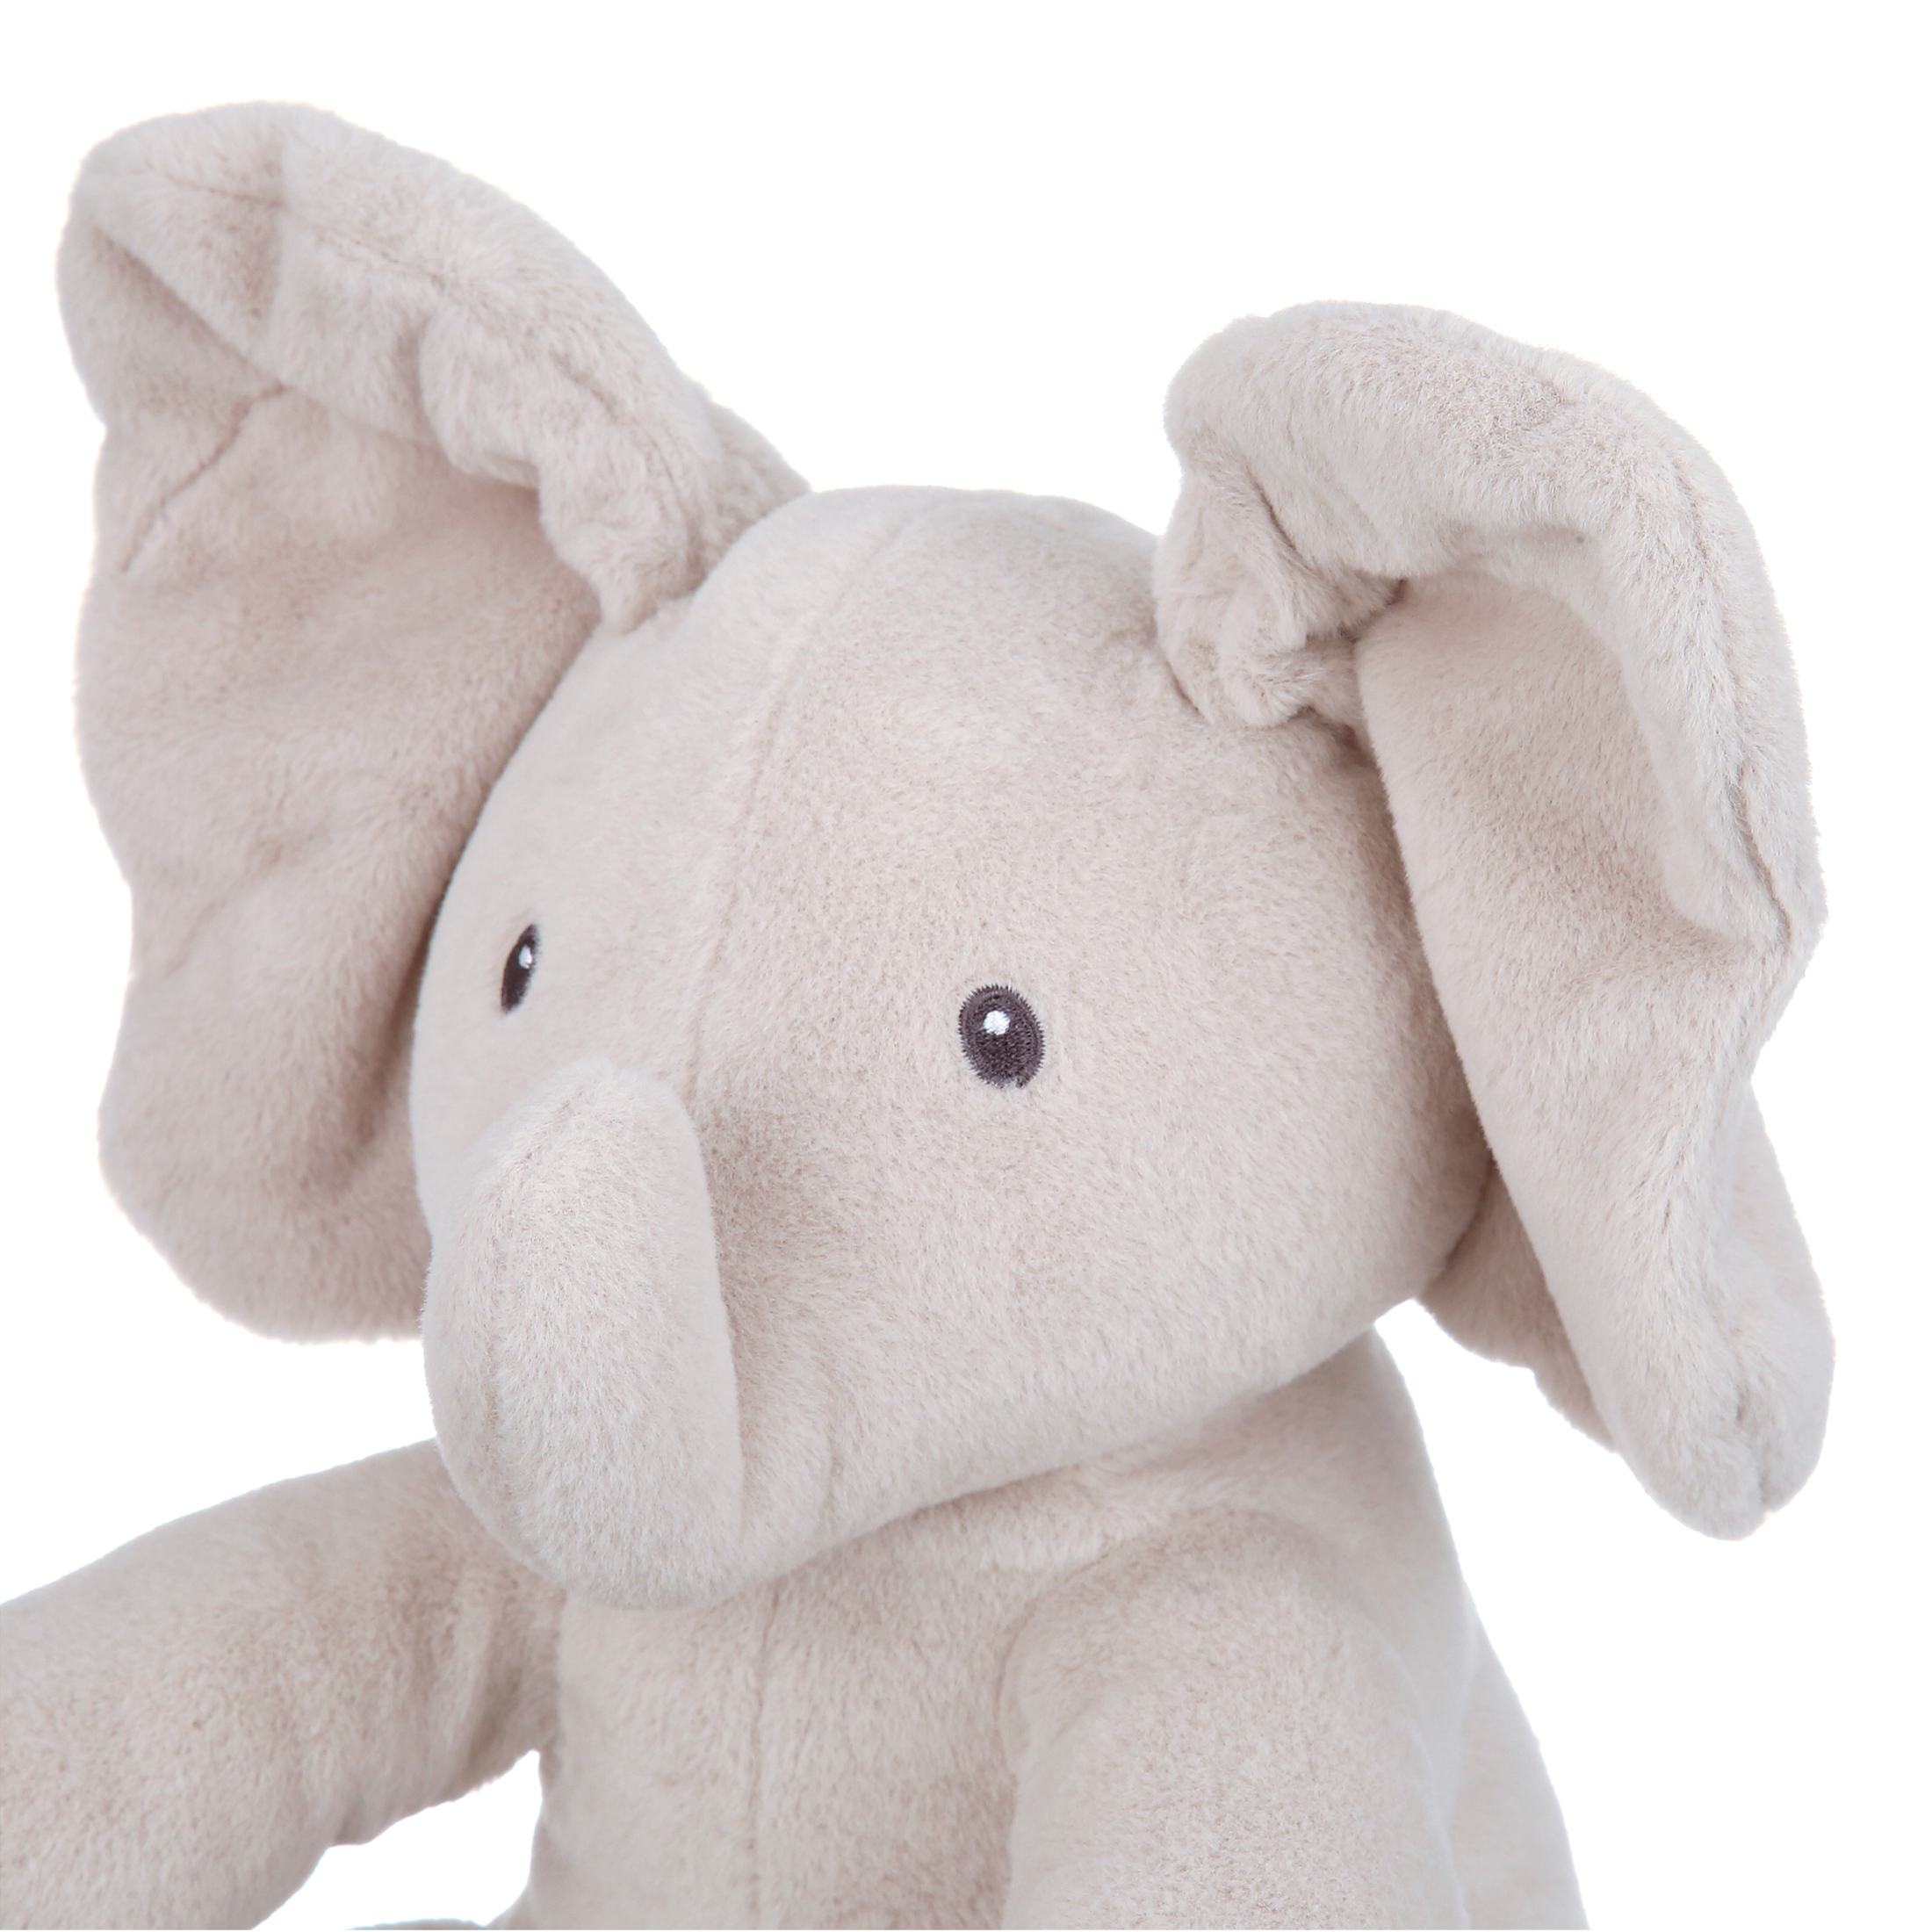 GUND Baby Animated Flappy The Elephant Stuffed Animal Plush, Gray, 12" - image 4 of 6